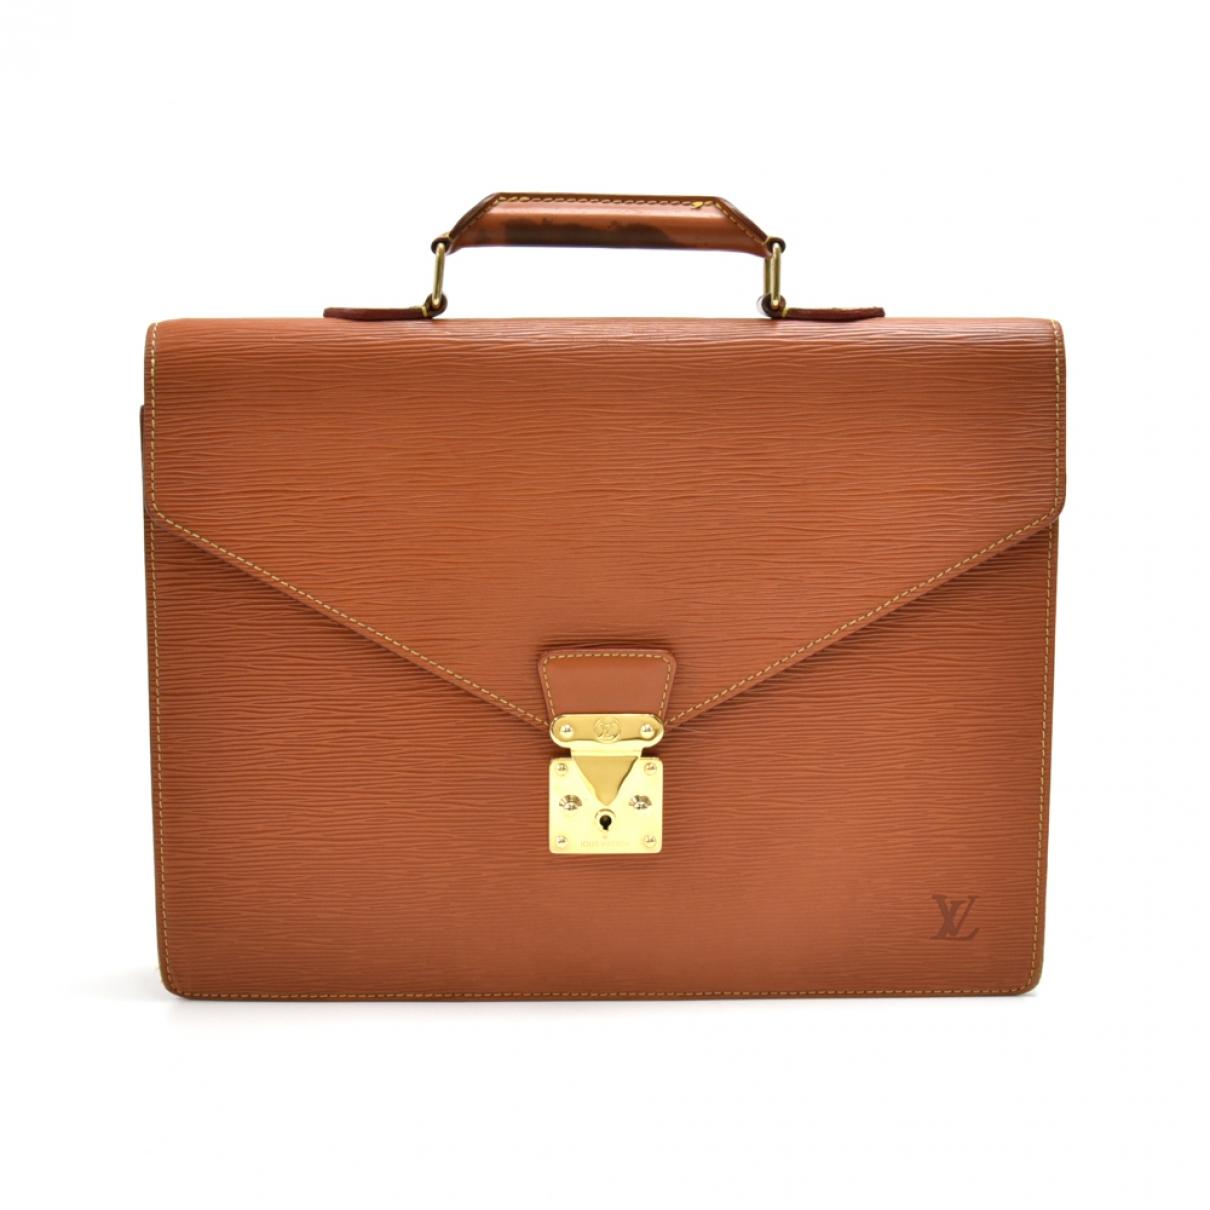 Lyst - Louis Vuitton Vintage Brown Leather Handbag in Brown